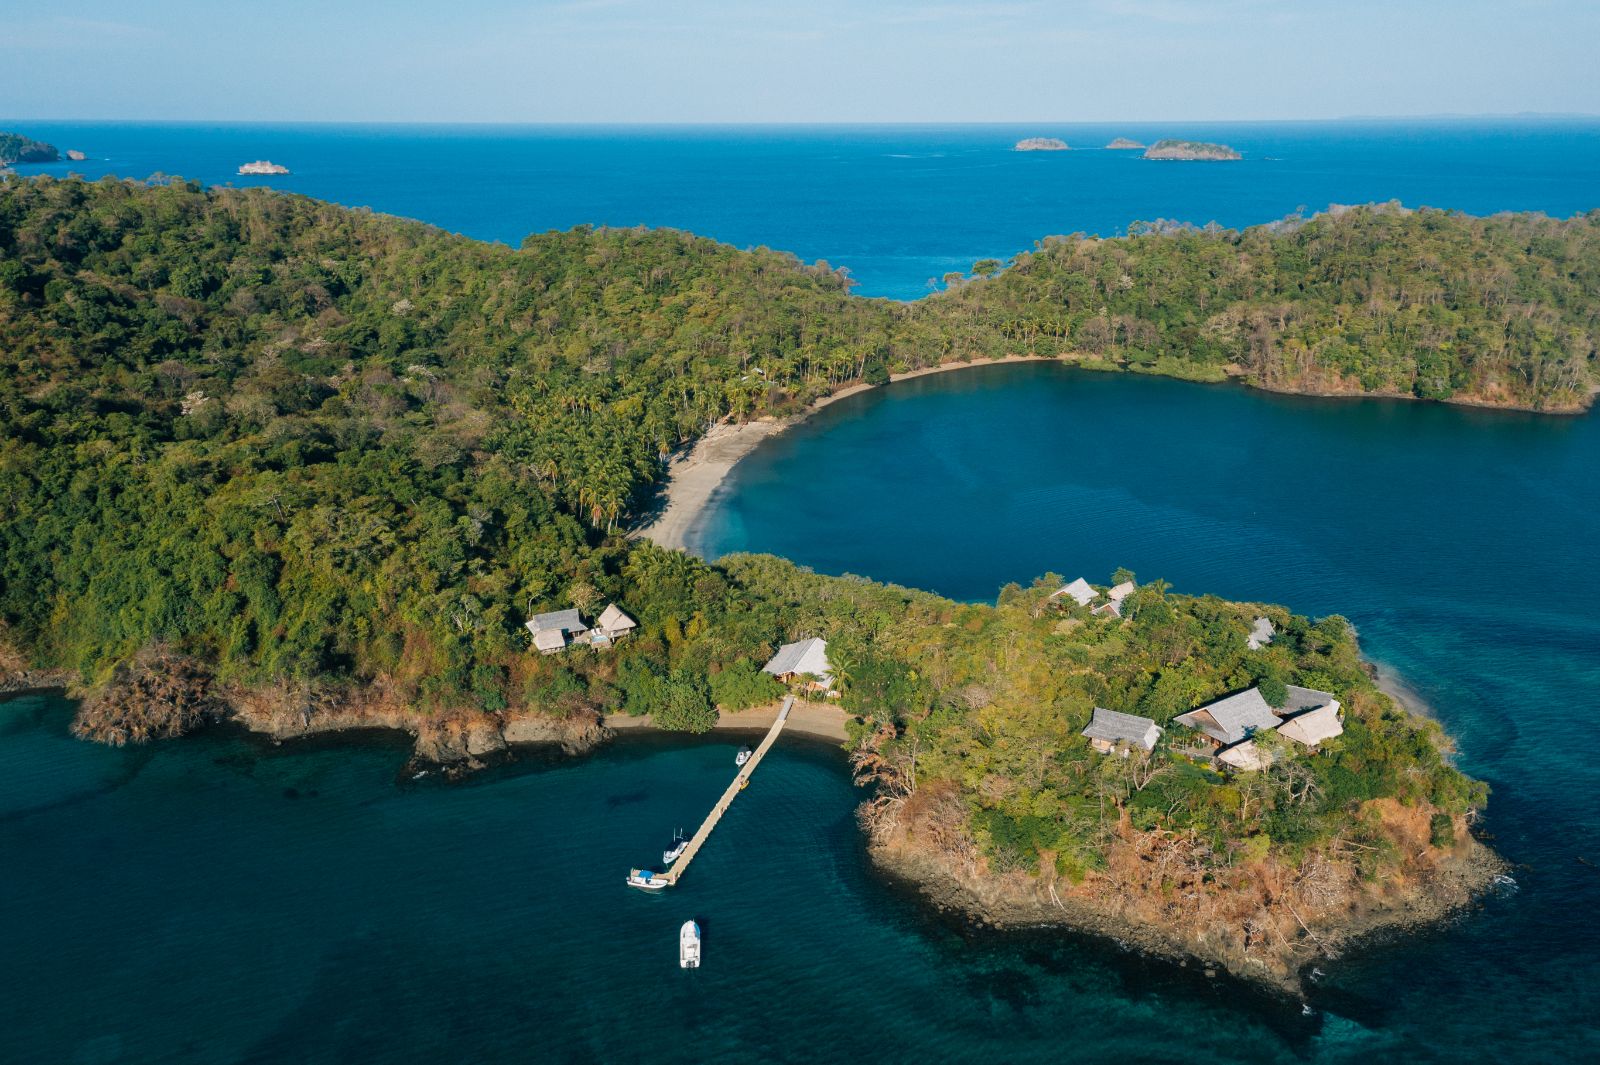 Aerial view of Islas Secas resort in Panama